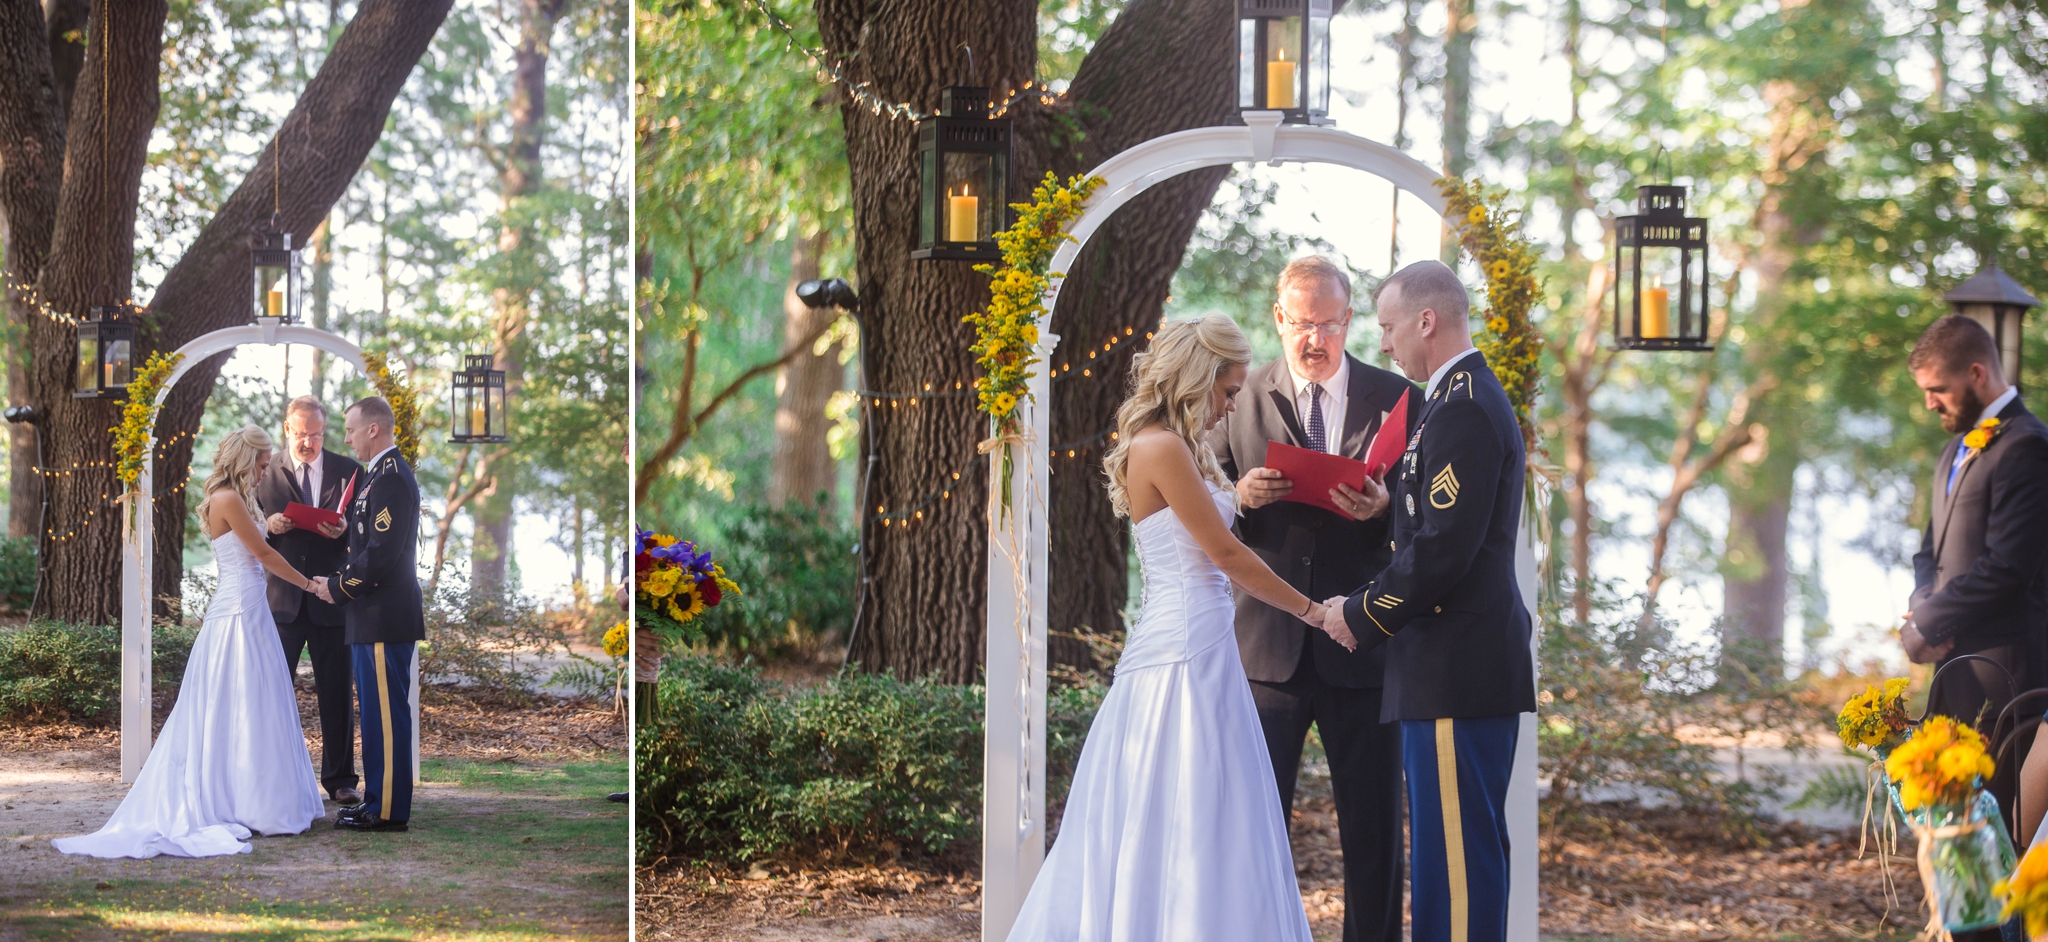 Wedding Ceremony at King Fisher Society by Laurinburg, North Carolina 